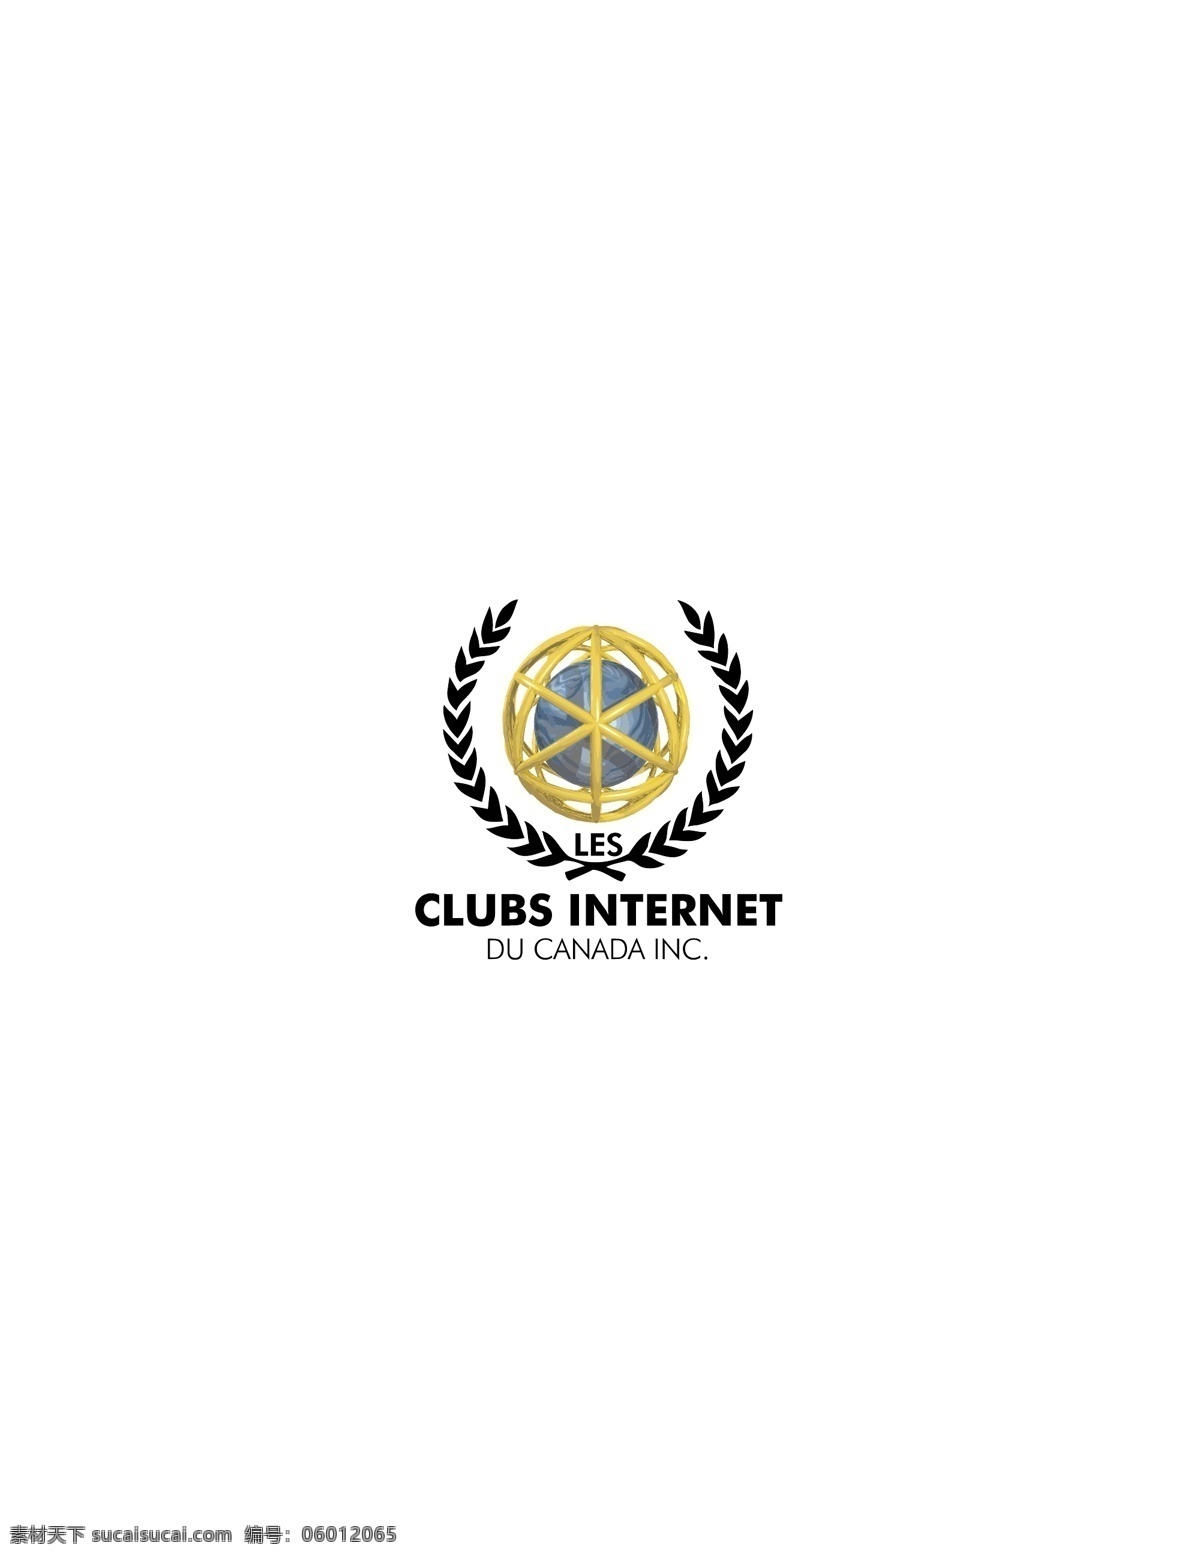 logo大全 logo 设计欣赏 商业矢量 矢量下载 clubs internet du canada 标志设计 欣赏 网页矢量 矢量图 其他矢量图